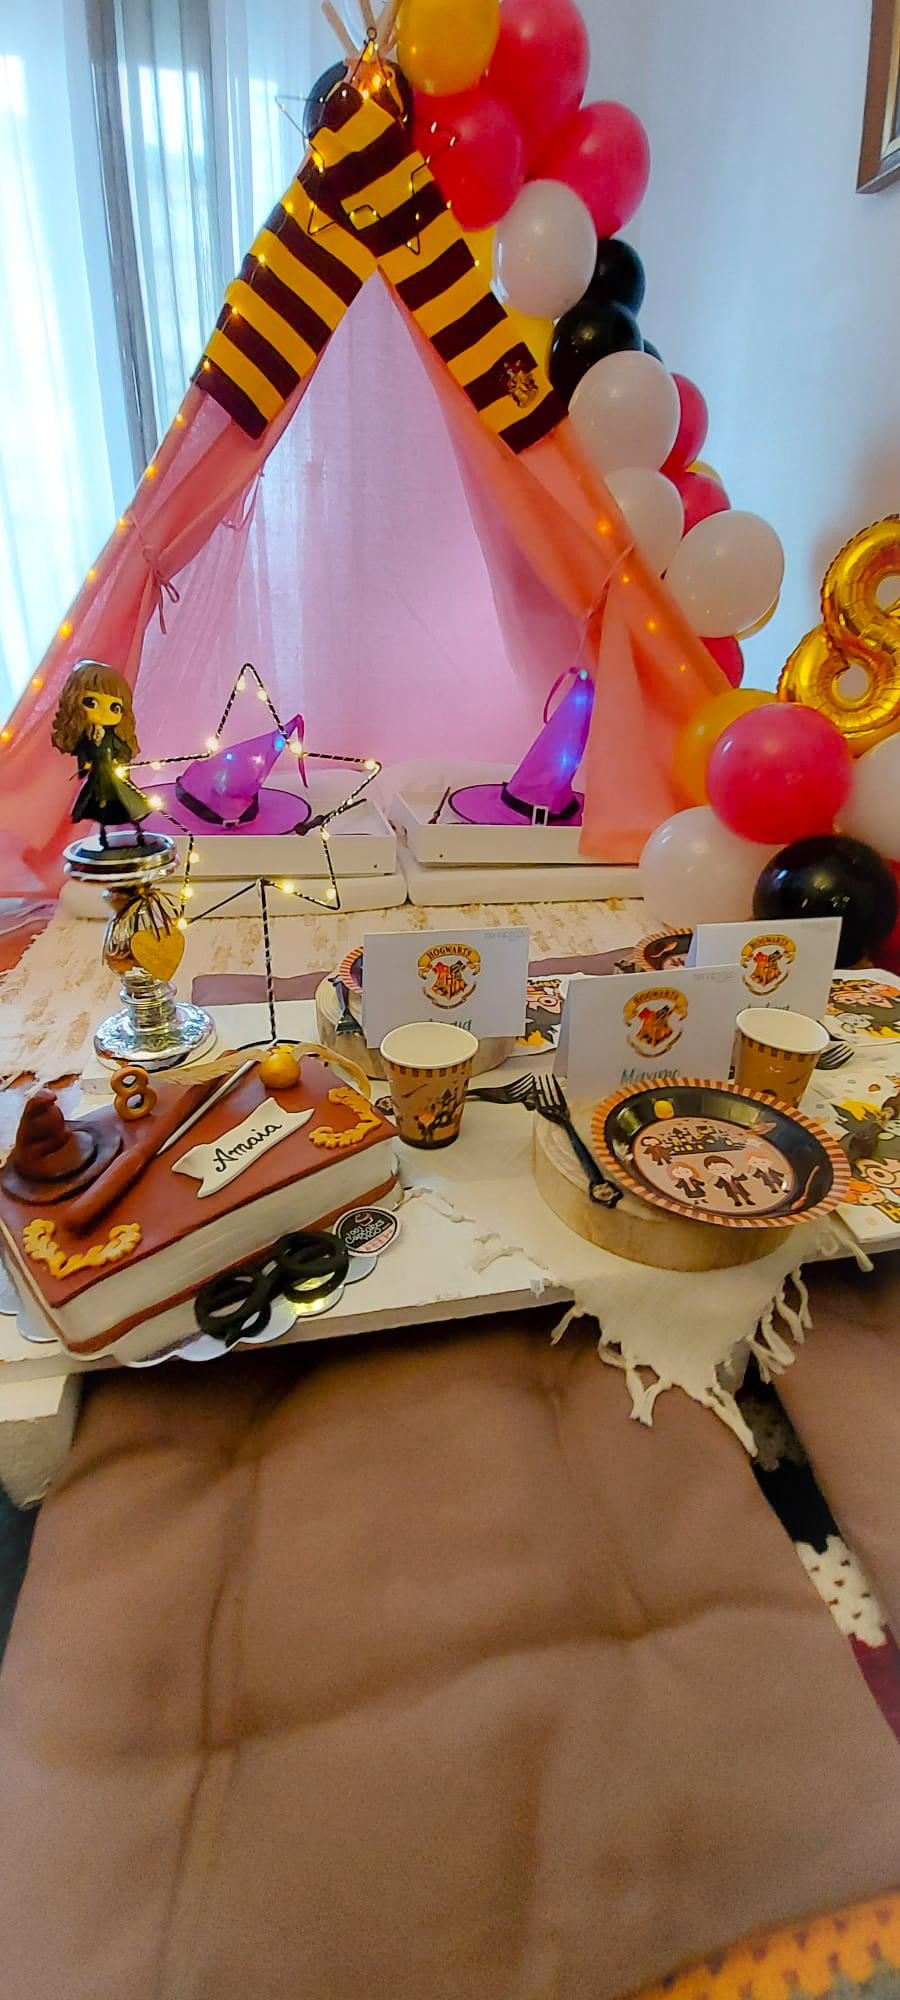 La Tipi Fiesta de Harry Potter de cumpleaños de Amaia - Tipifiestas Galicia